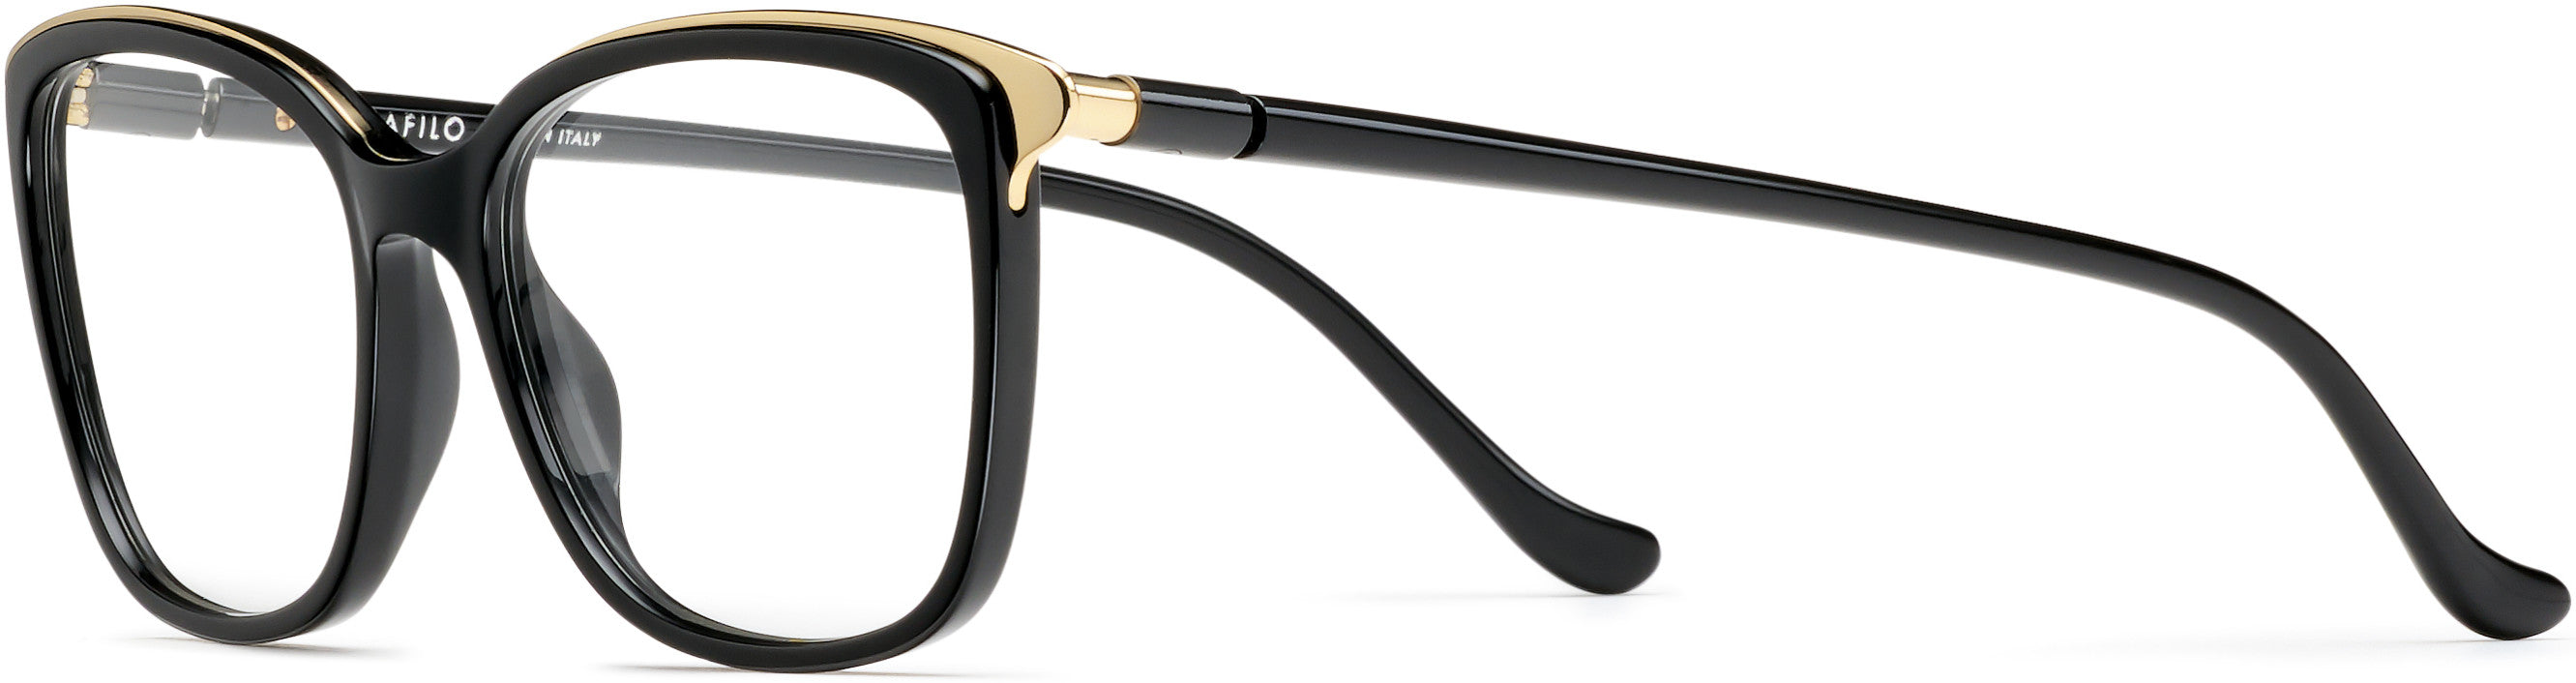 Safilo 2.0 Ciglia 03 Cat Eye/butterfly Eyeglasses 02M2-02M2  Black Gold (00 Demo Lens)